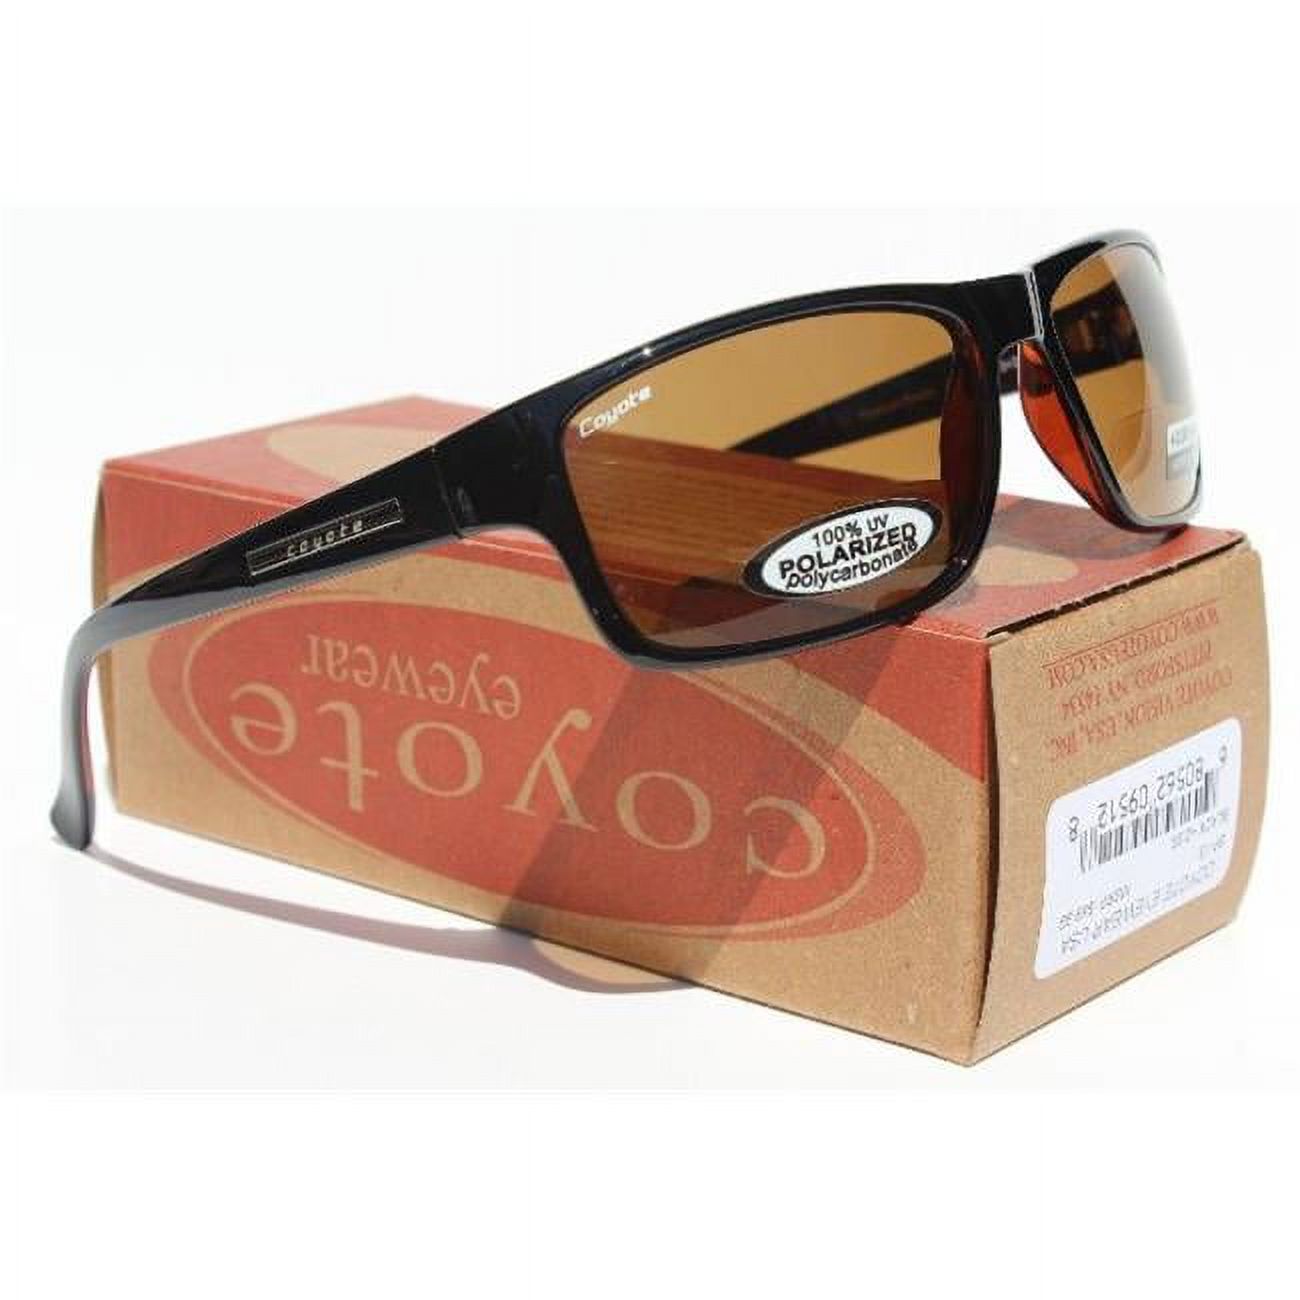 Coyote Eyewear BP-13 +2.00 Polarized Reader Premium Sunglasses, Black & Brown - image 1 of 5